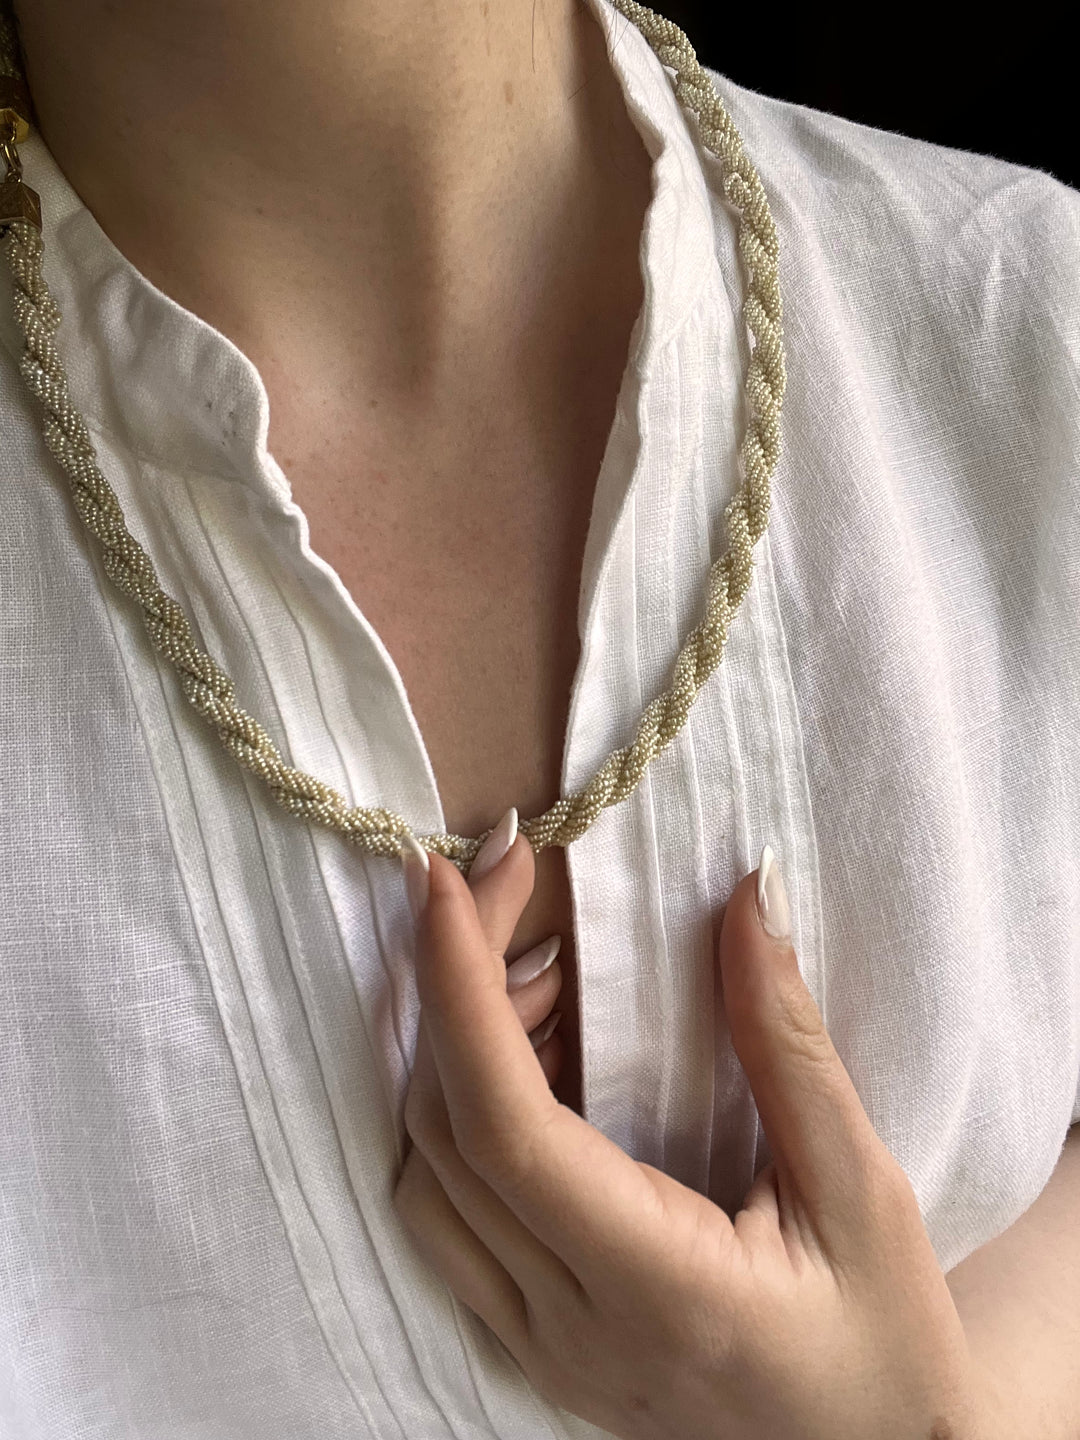 Extraordinarily Chic Pearl “Rope” Chain Circa 1840